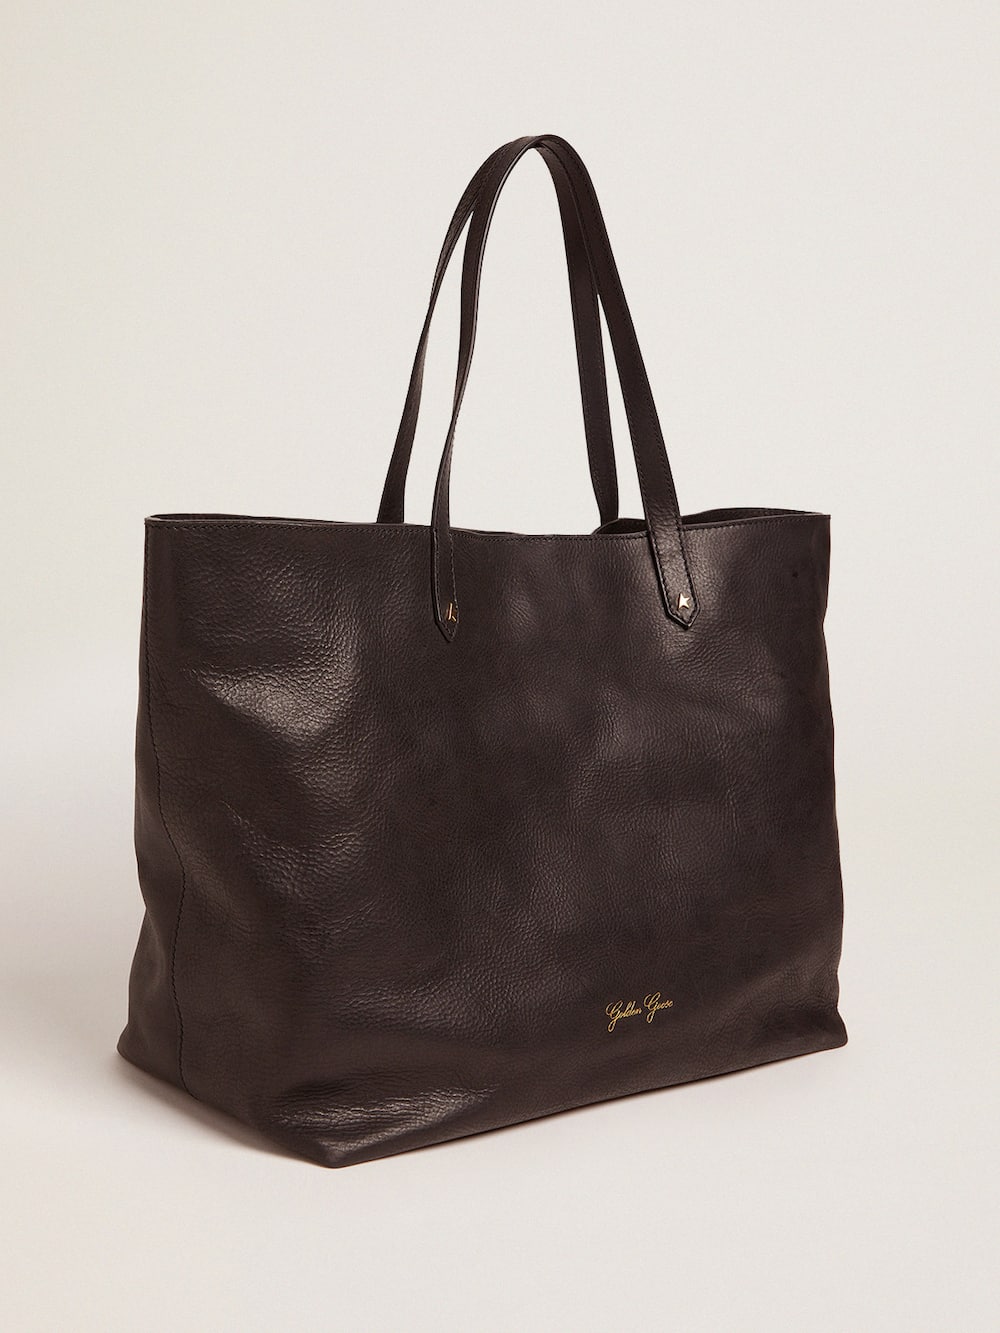 Golden Goose - Women's Pasadena Bag black with gold logo in 